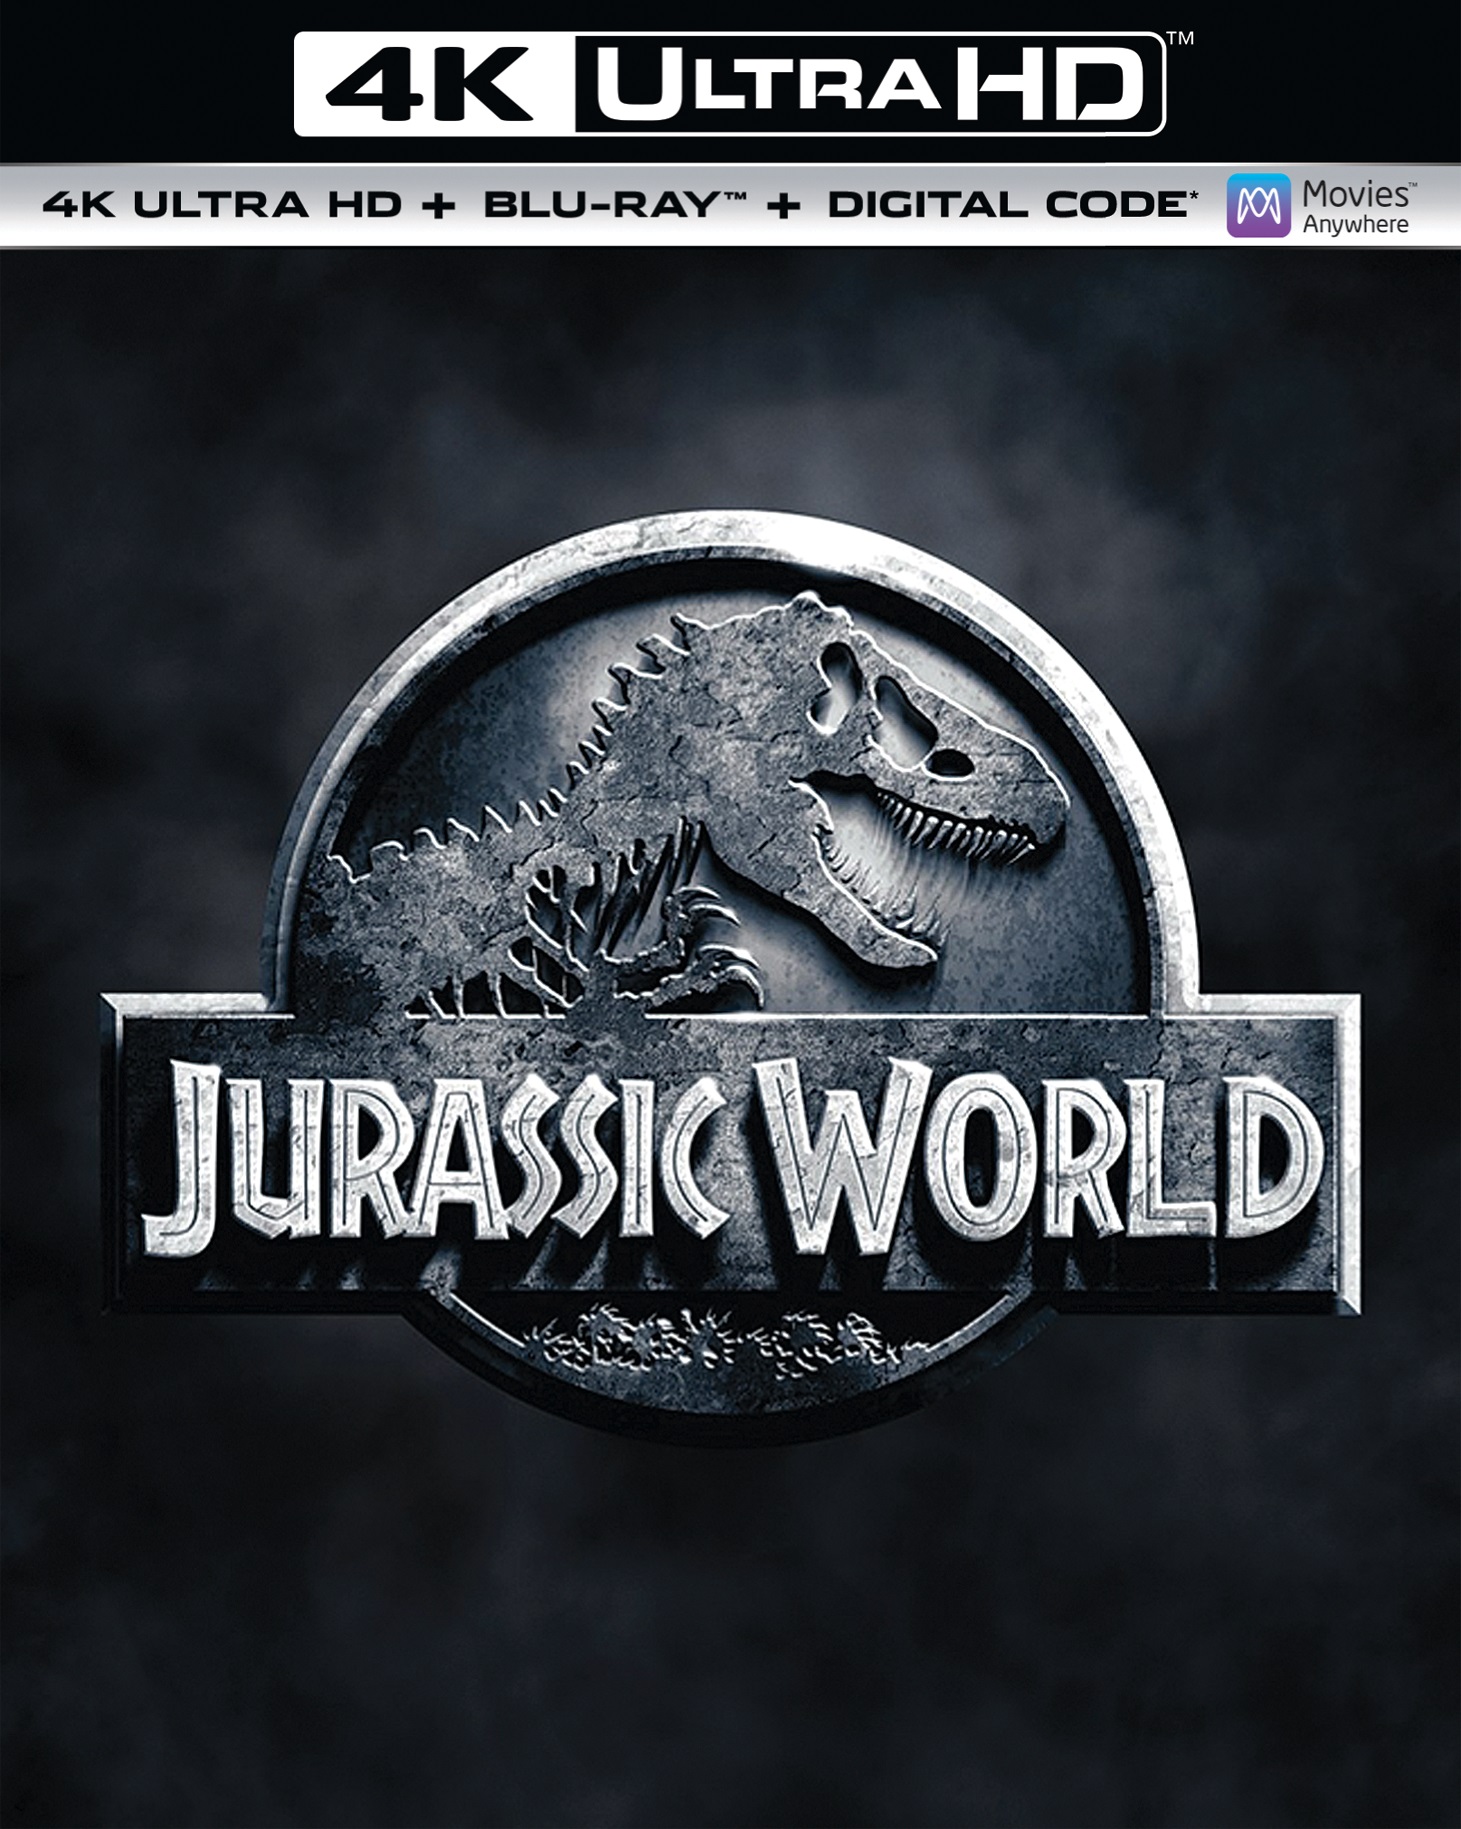 Jurassic World (4K Ultra HD + Blu-ray + Digital Download) - UHD [ 2015 ]  - Adventure Movies On 4K Ultra HD Blu-ray - Movies On GRUV